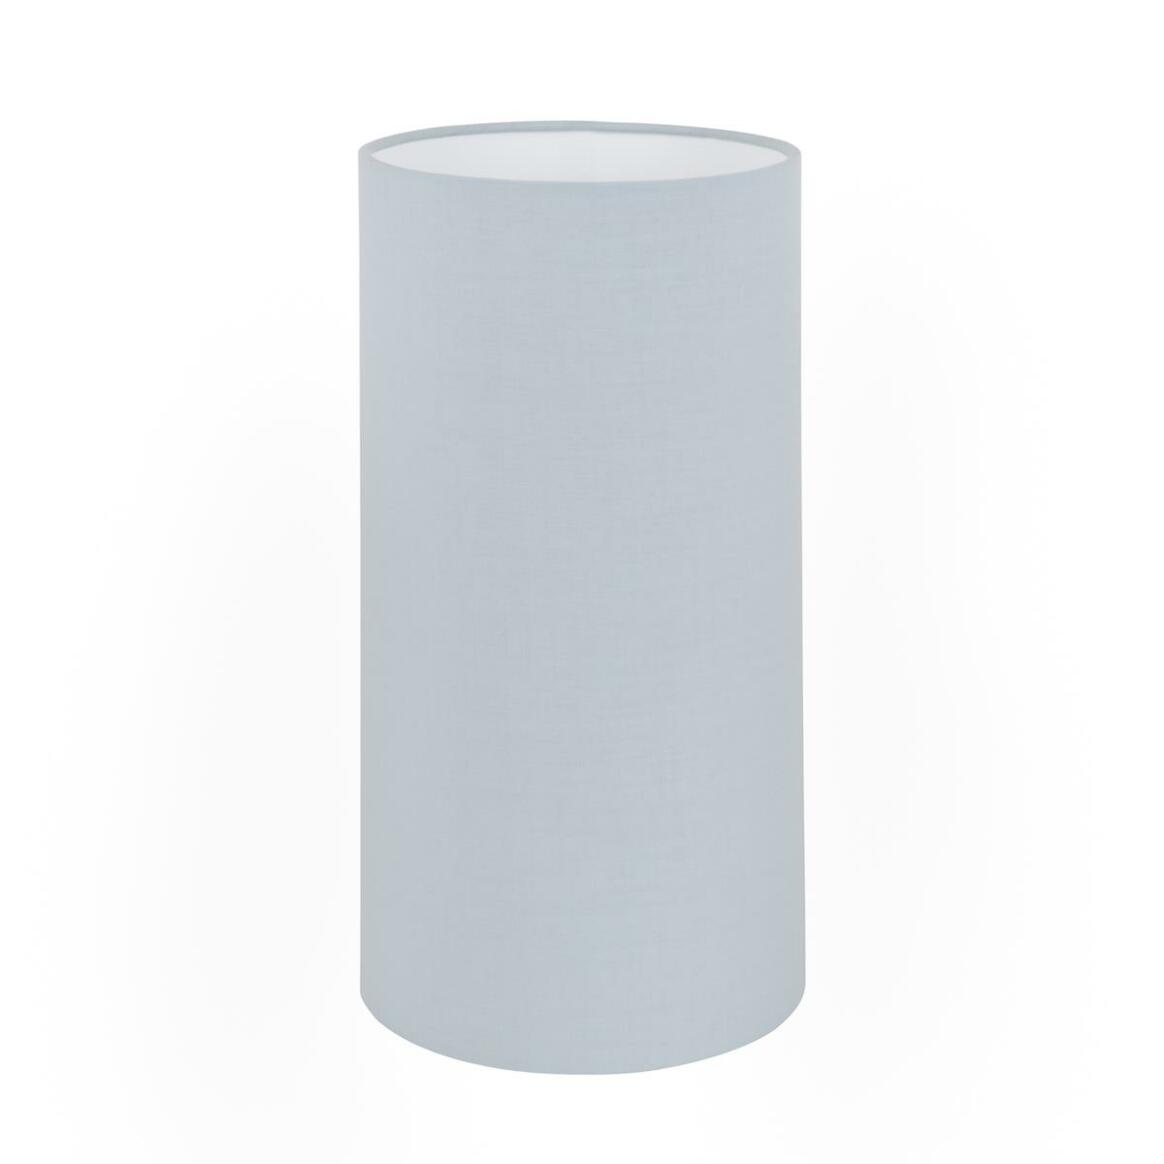 Cylinder fabric lamp shade 11.8" main product image